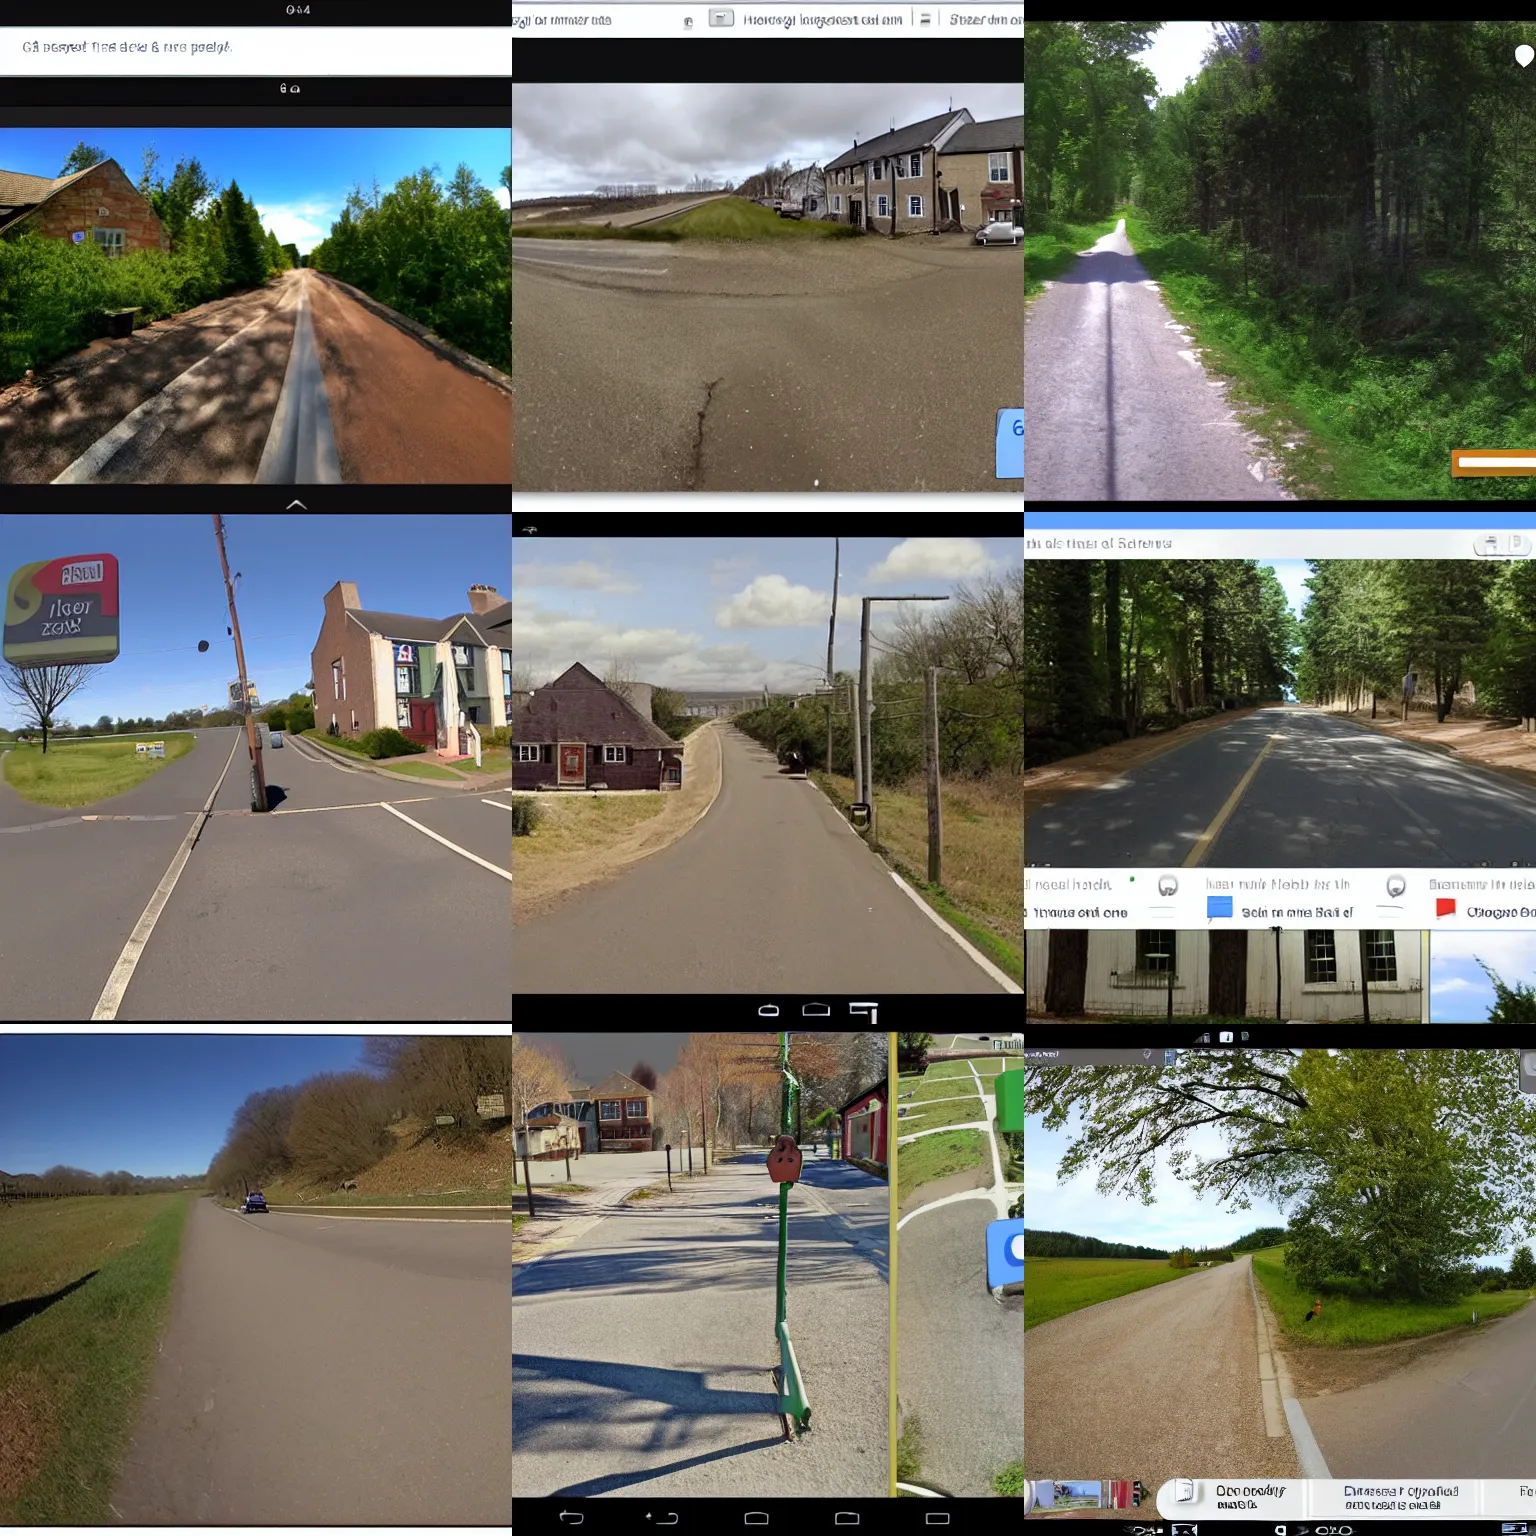 Prompt: google streetview screenshot from hogmeade